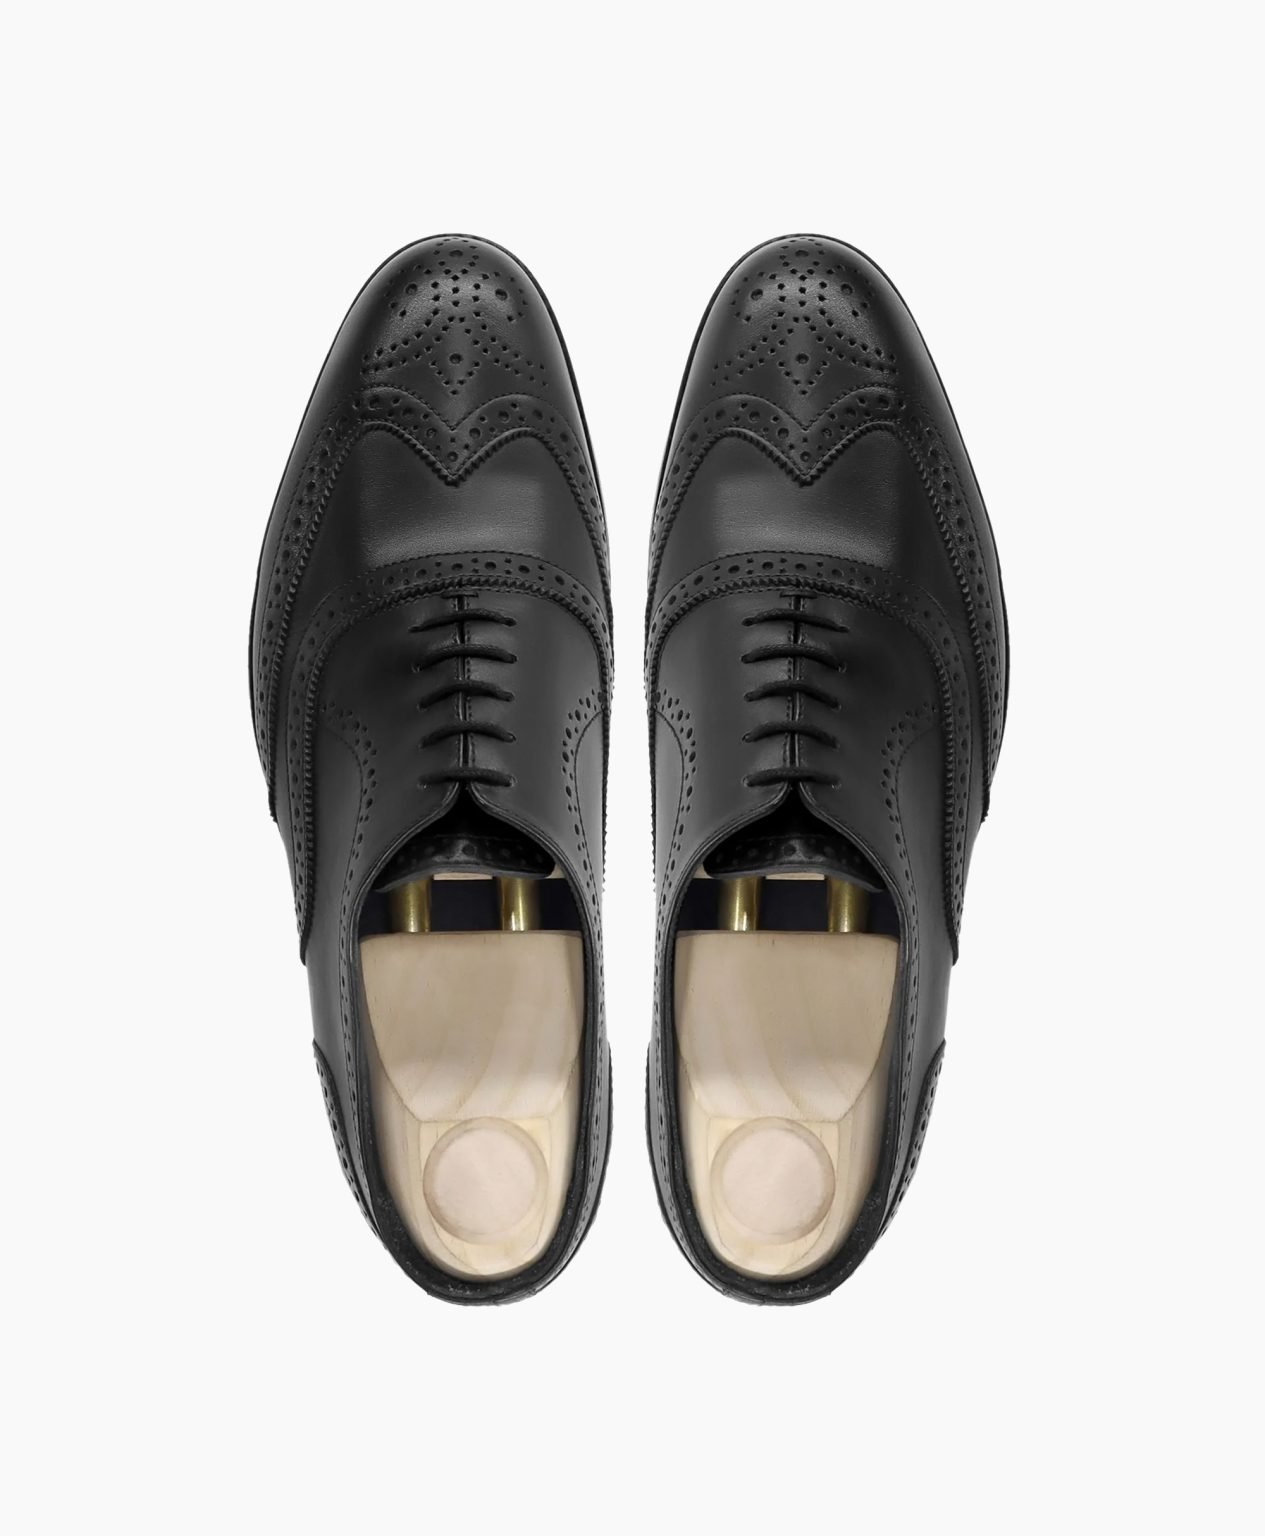 huntingdon-oxford-black-leather-shoes-image202